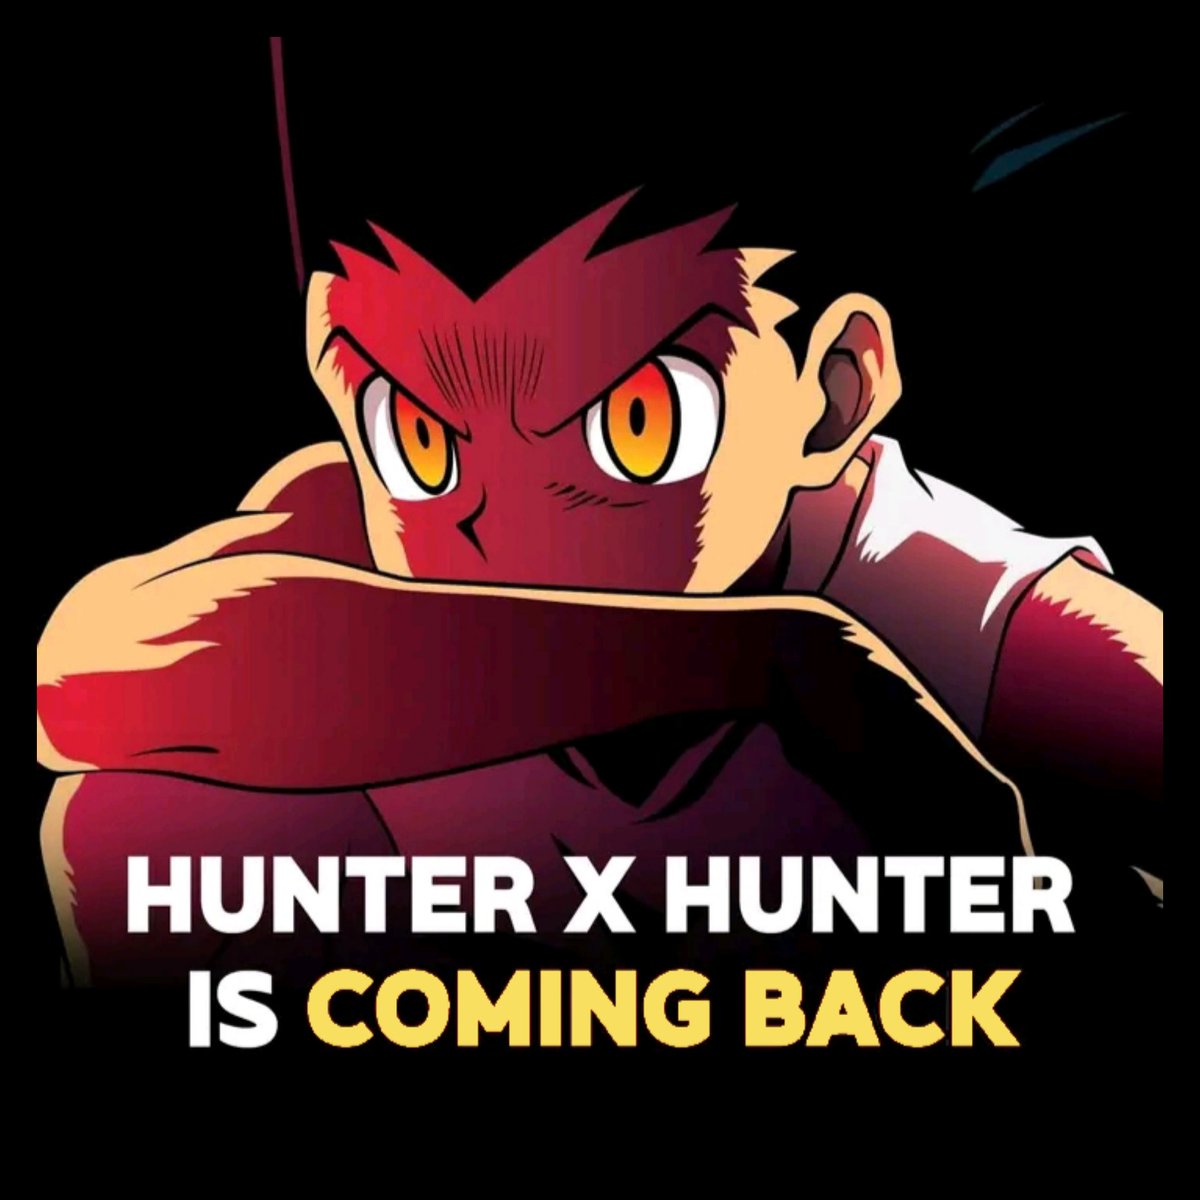 Hunter x Hunter is back on @Netflix - Yoshihiro Togashi